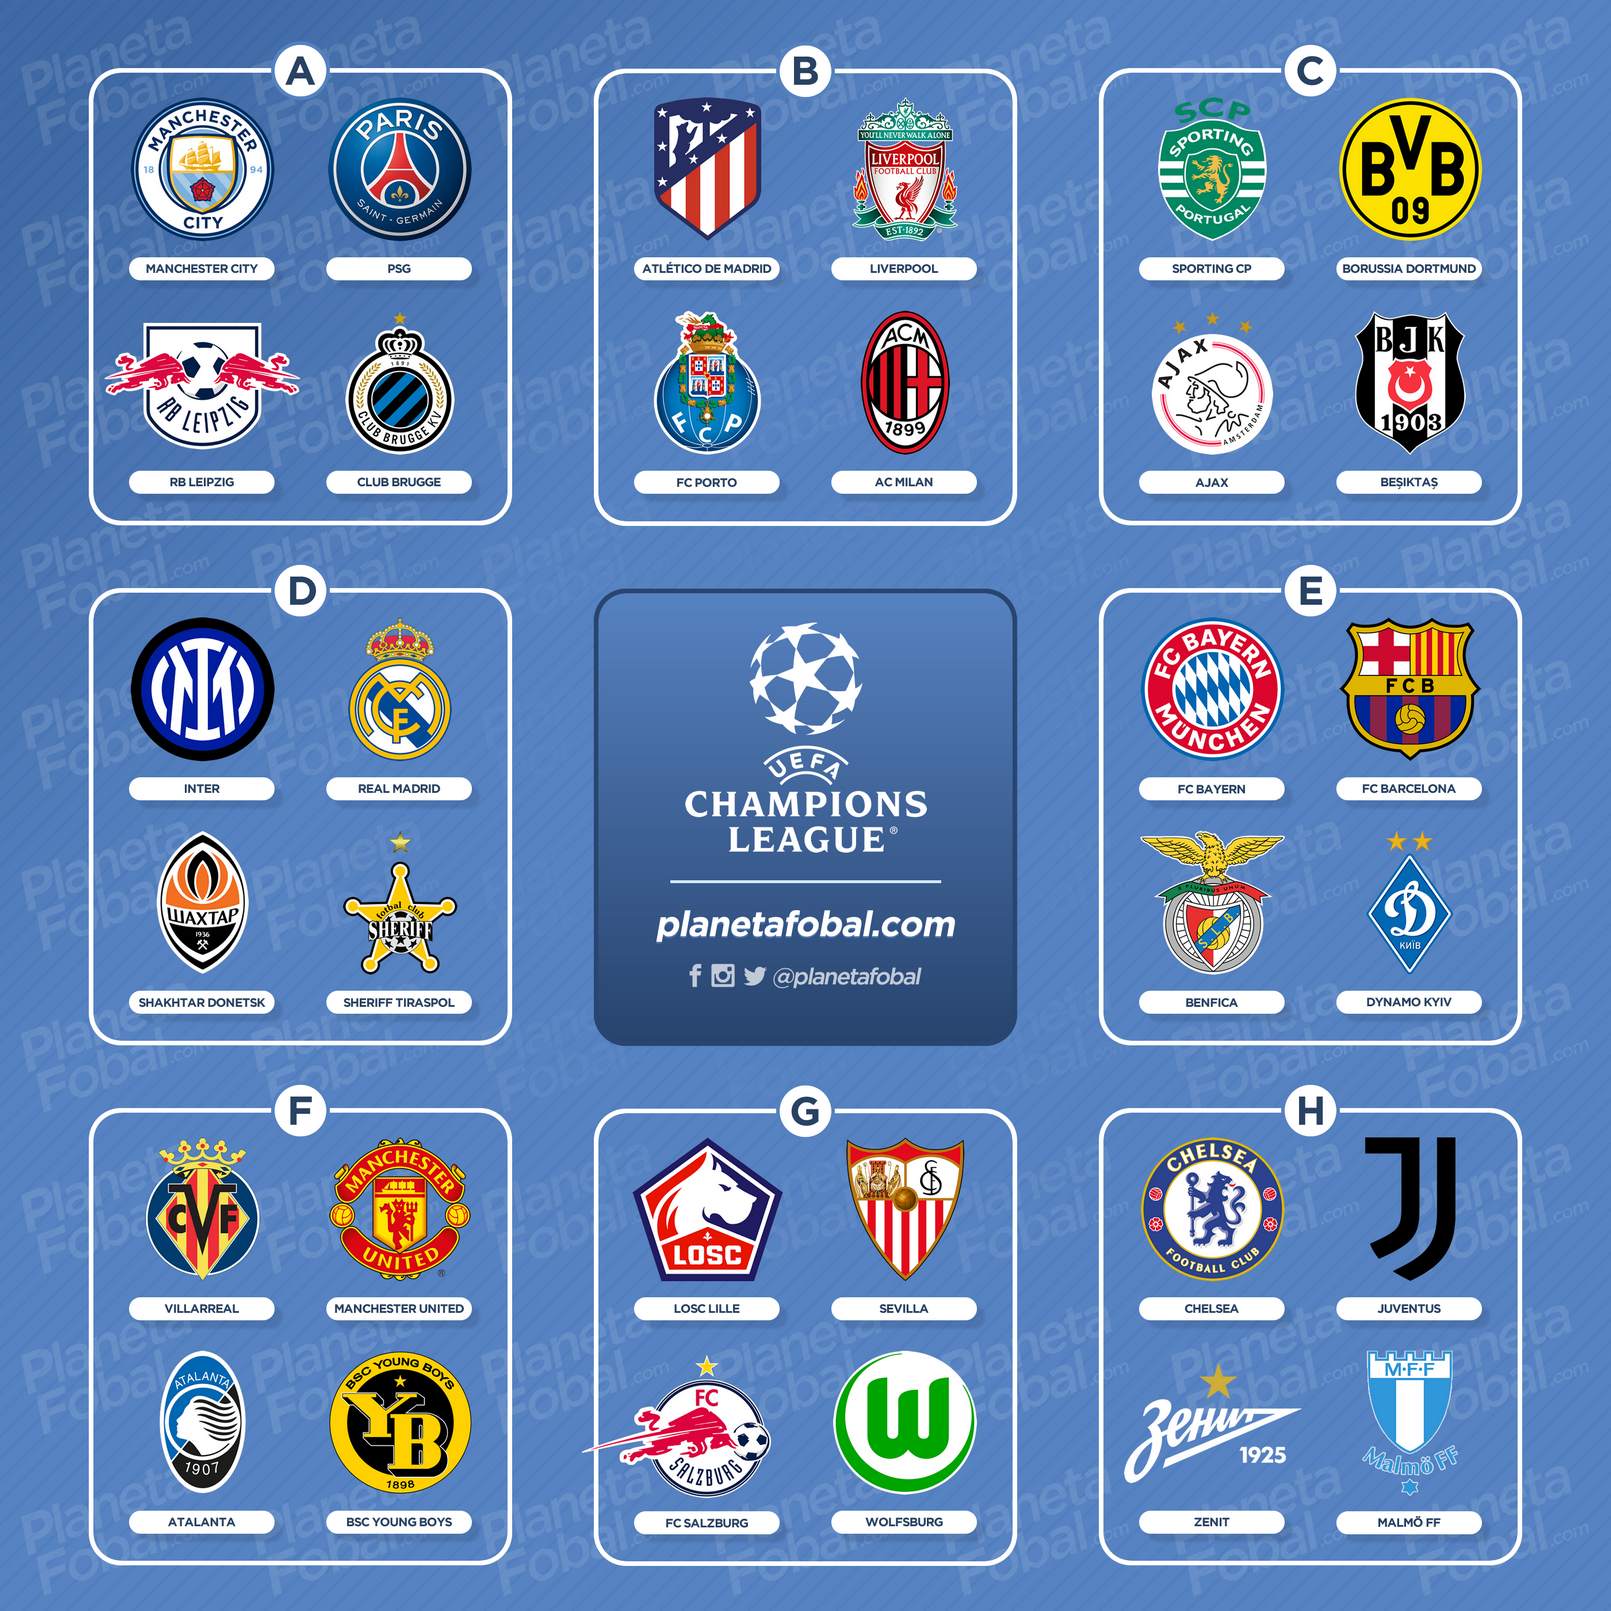 Grupos de la UEFA Champions League 2021/22